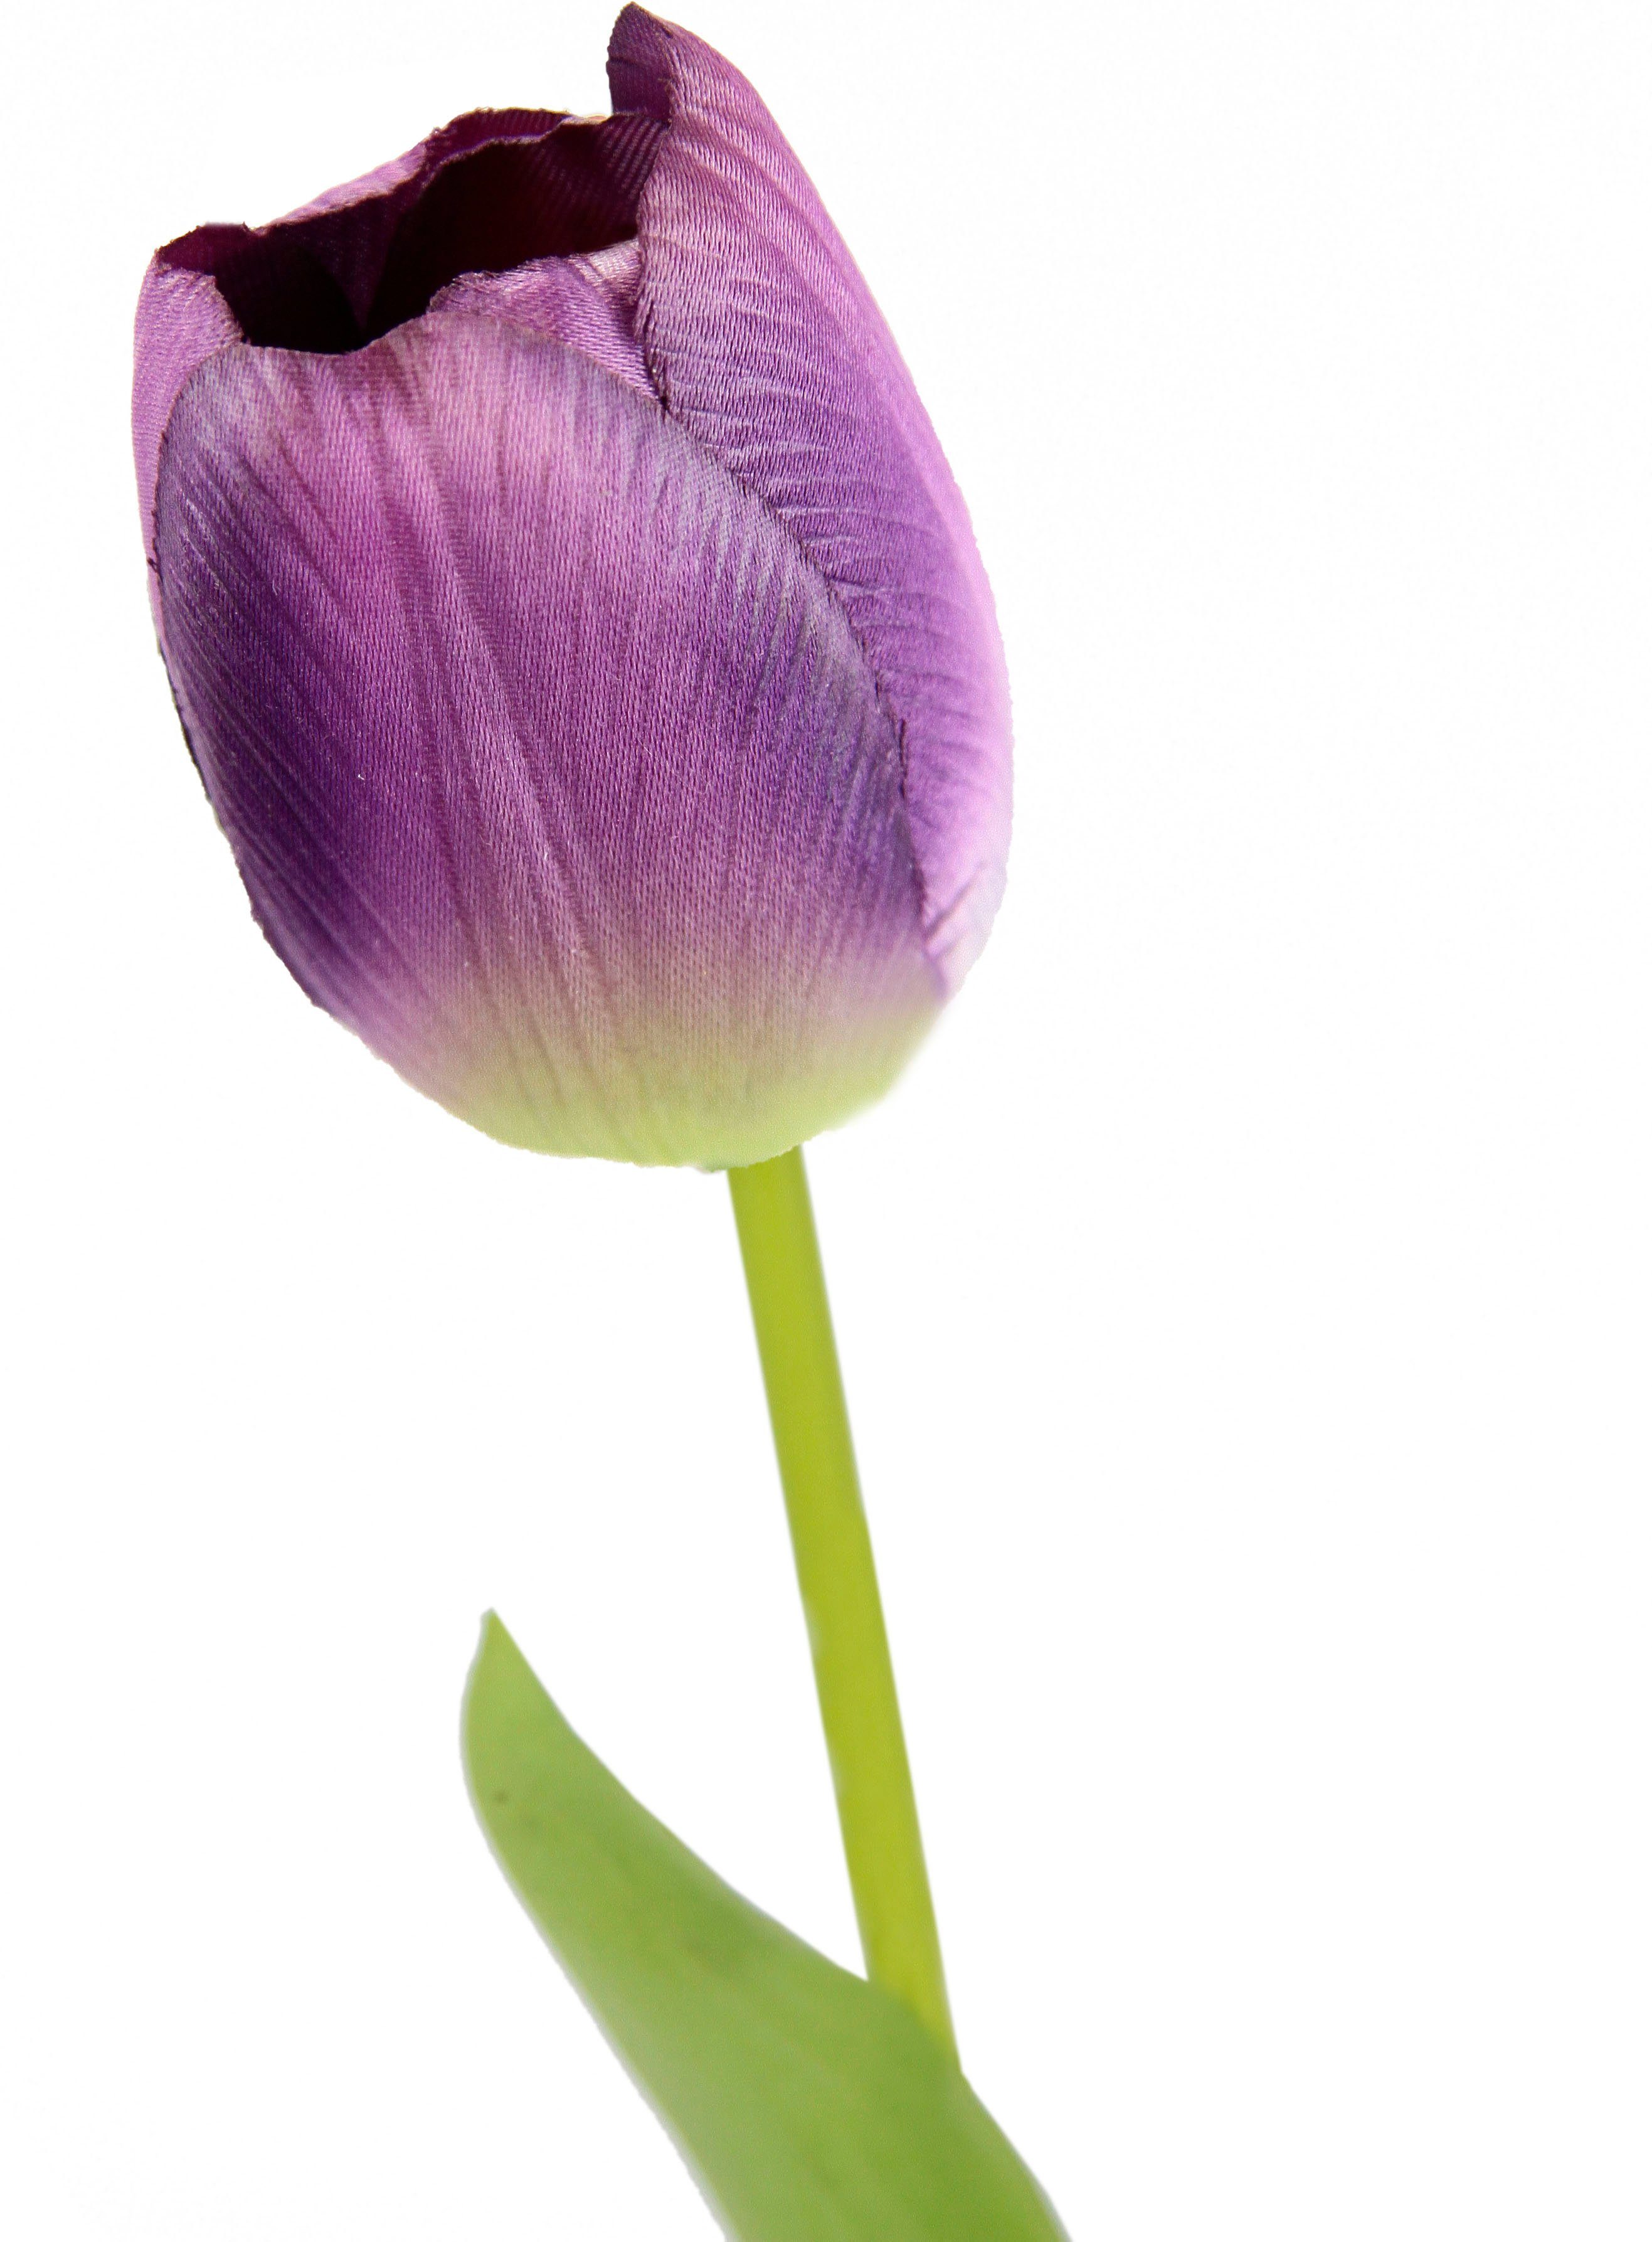 künstliche I.GE.A., Stielblume Touch Real Kunstblumen, 67 Höhe 5er Kunstblume Tulpen, violett Set cm, Tulpenknospen,